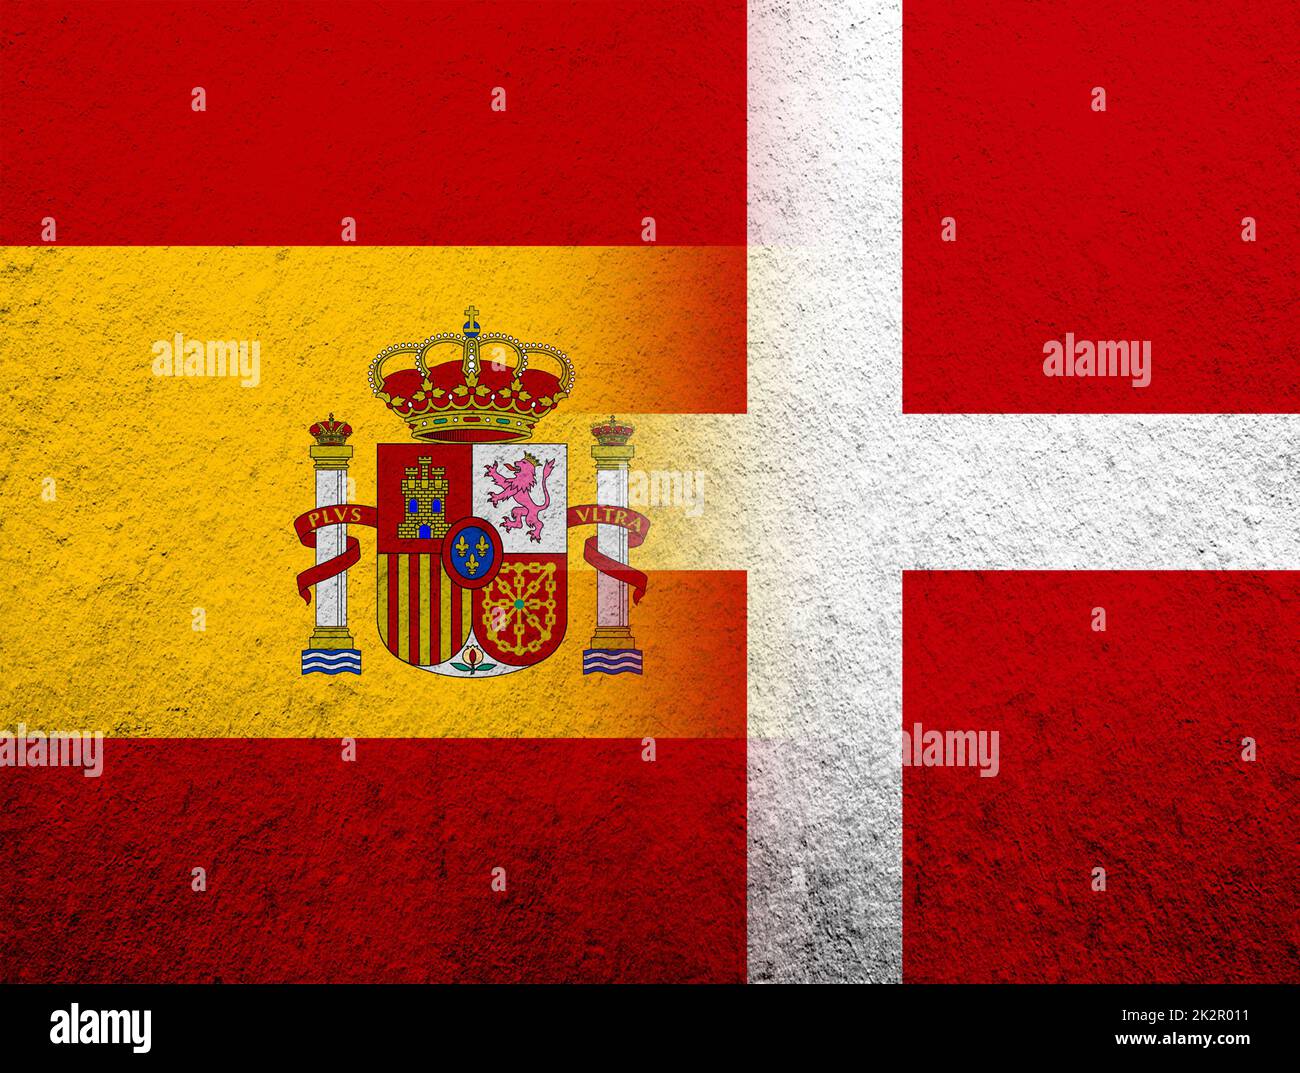 the Kingdom of Denmark National flag with Kingdom of Spain National flag. Grunge Background Stock Photo